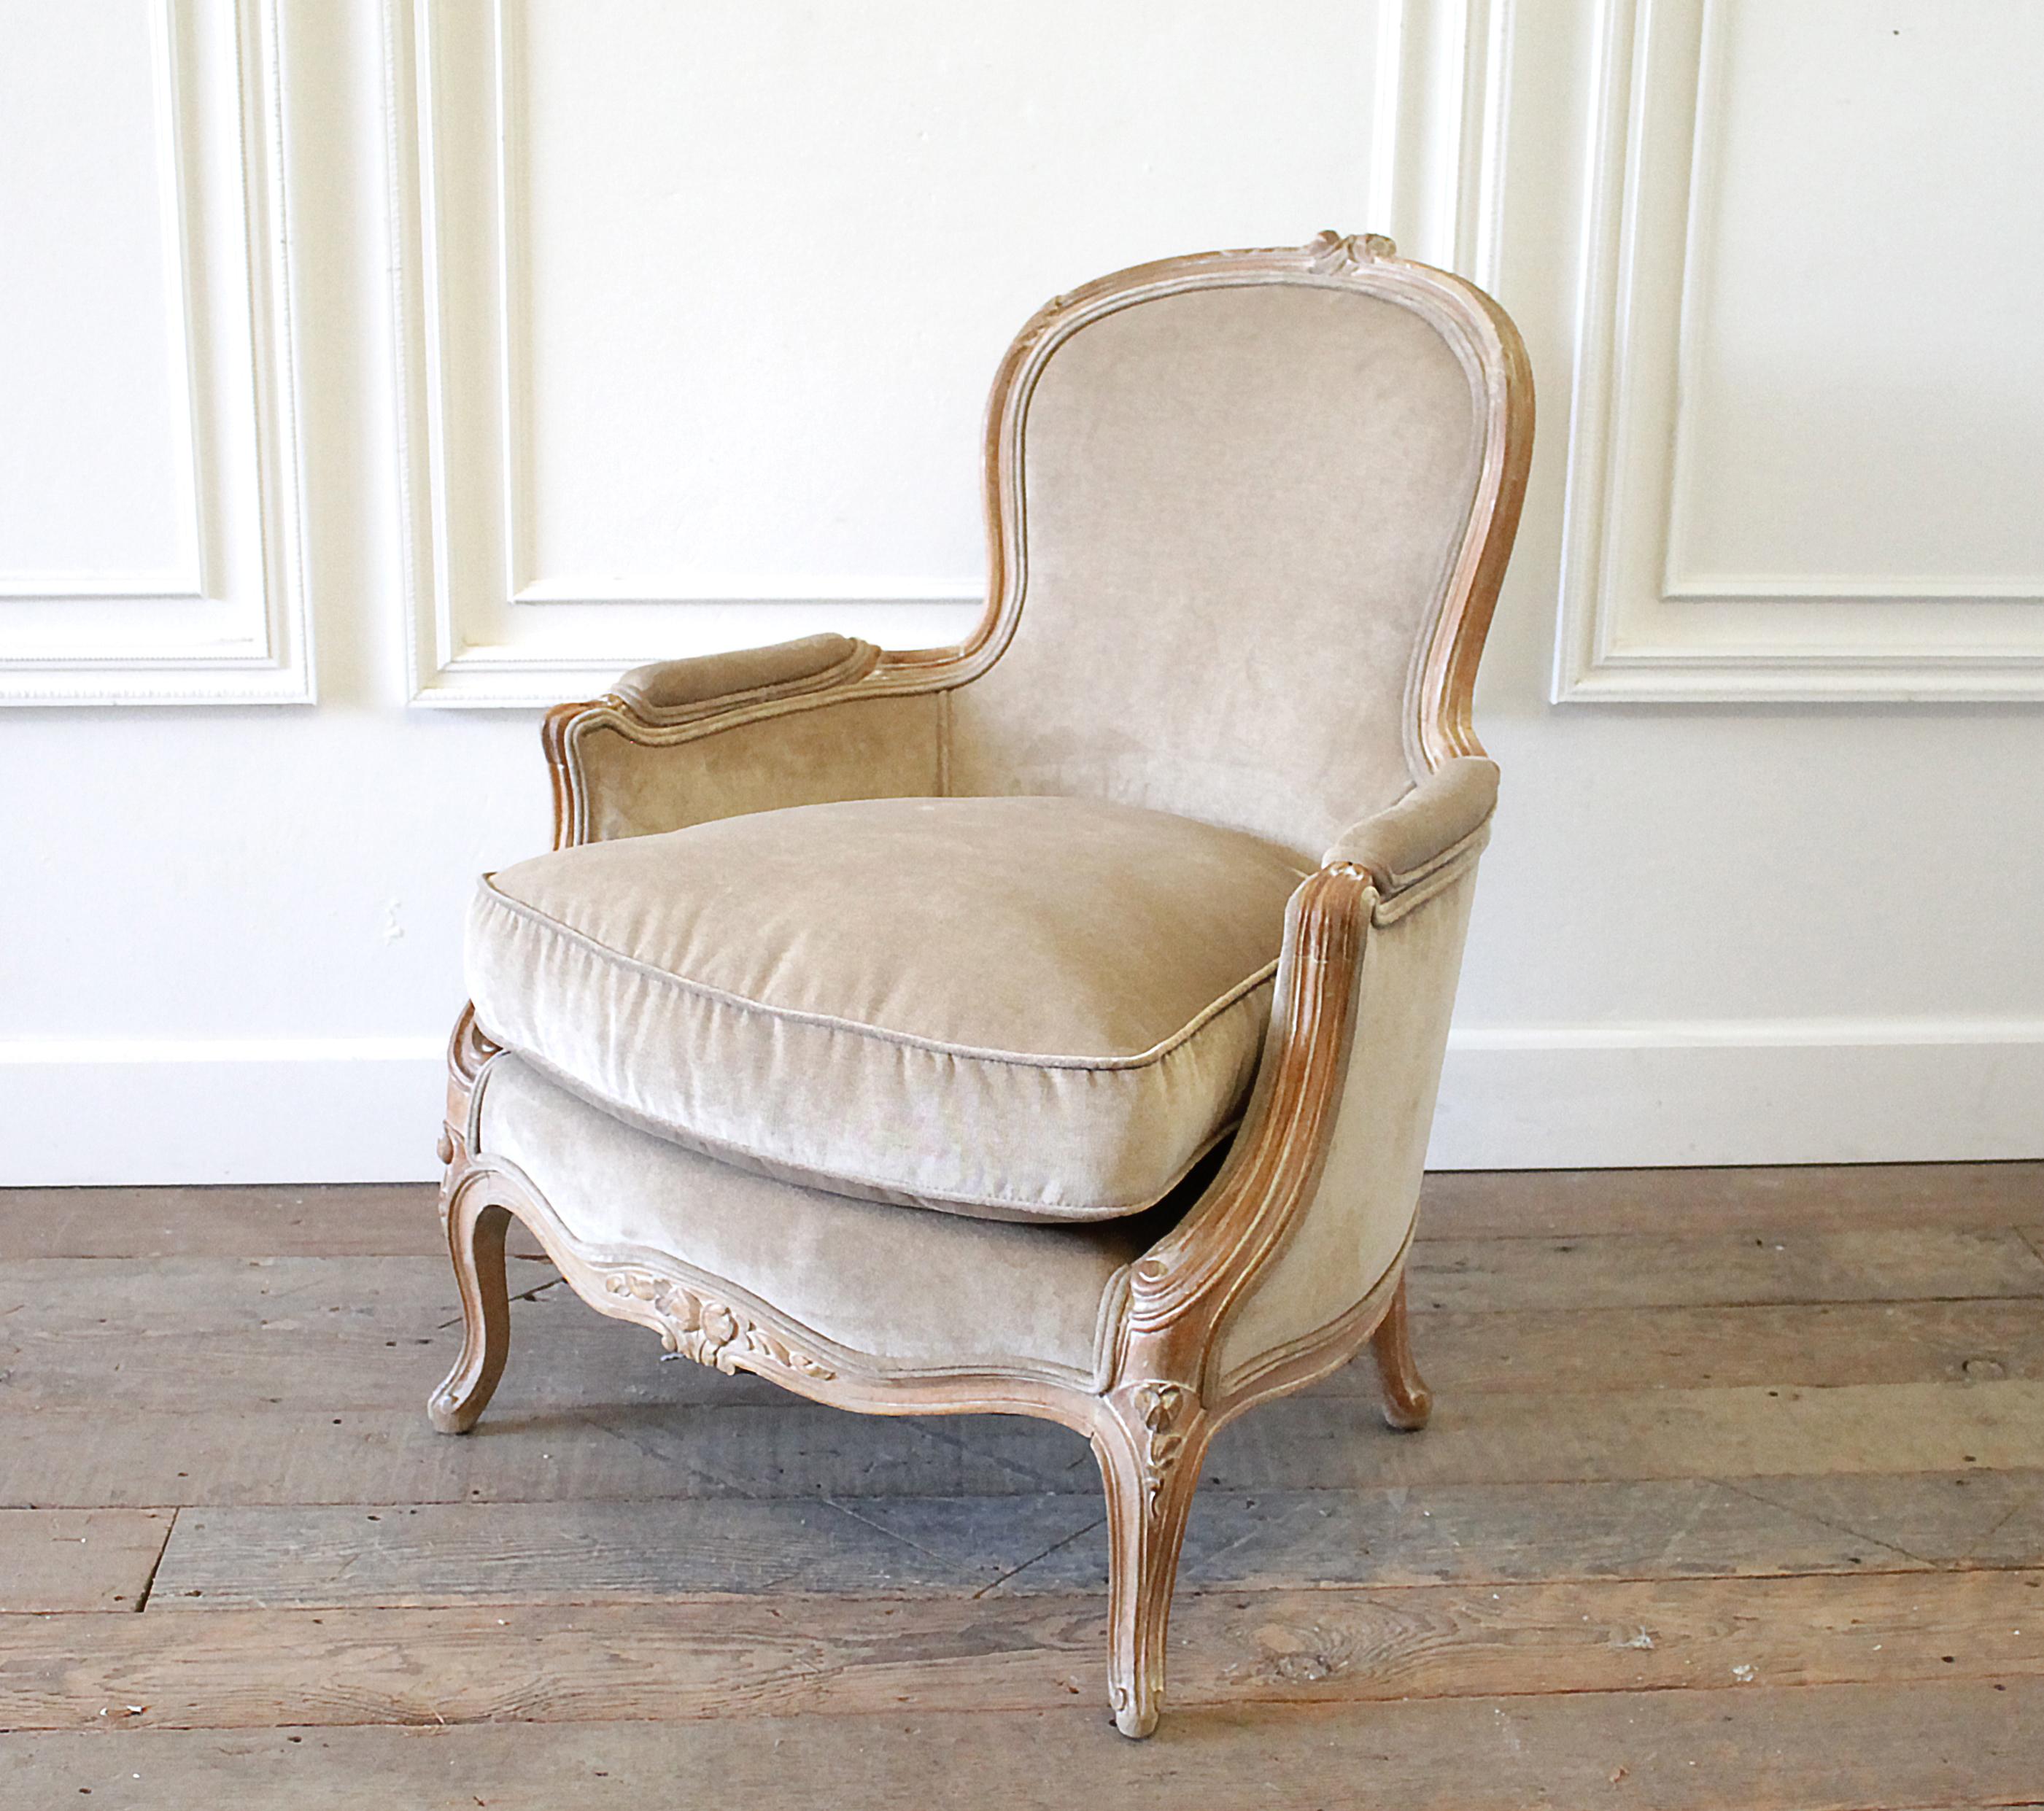 ottoman style chair